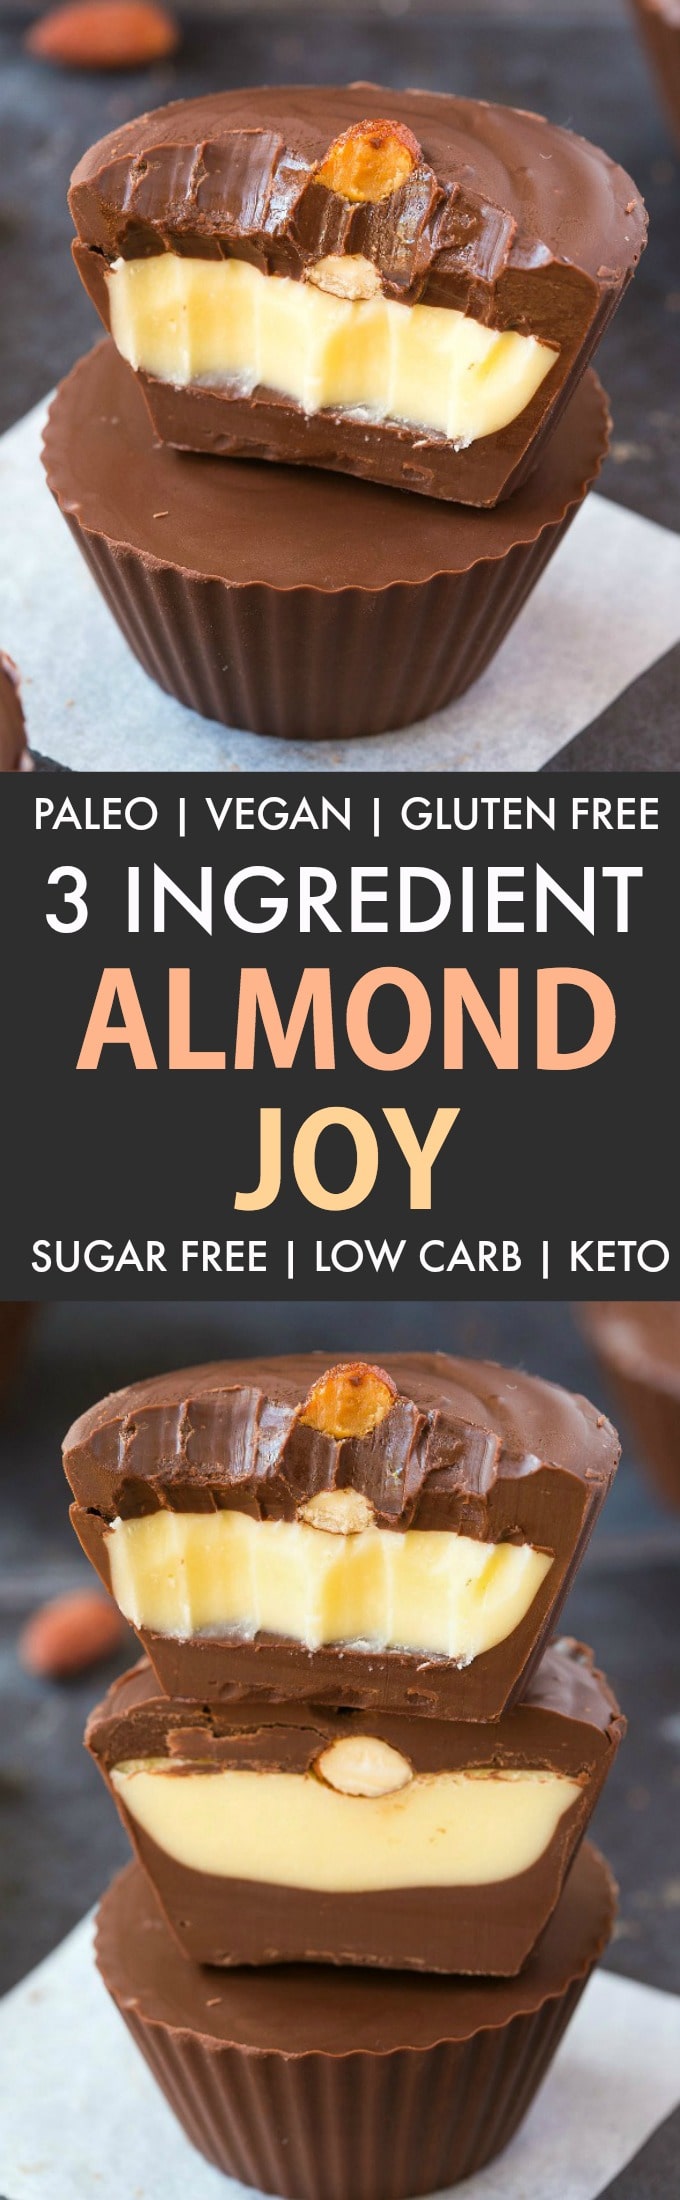 Healthy 3 ingredient sugar free almond joy cups